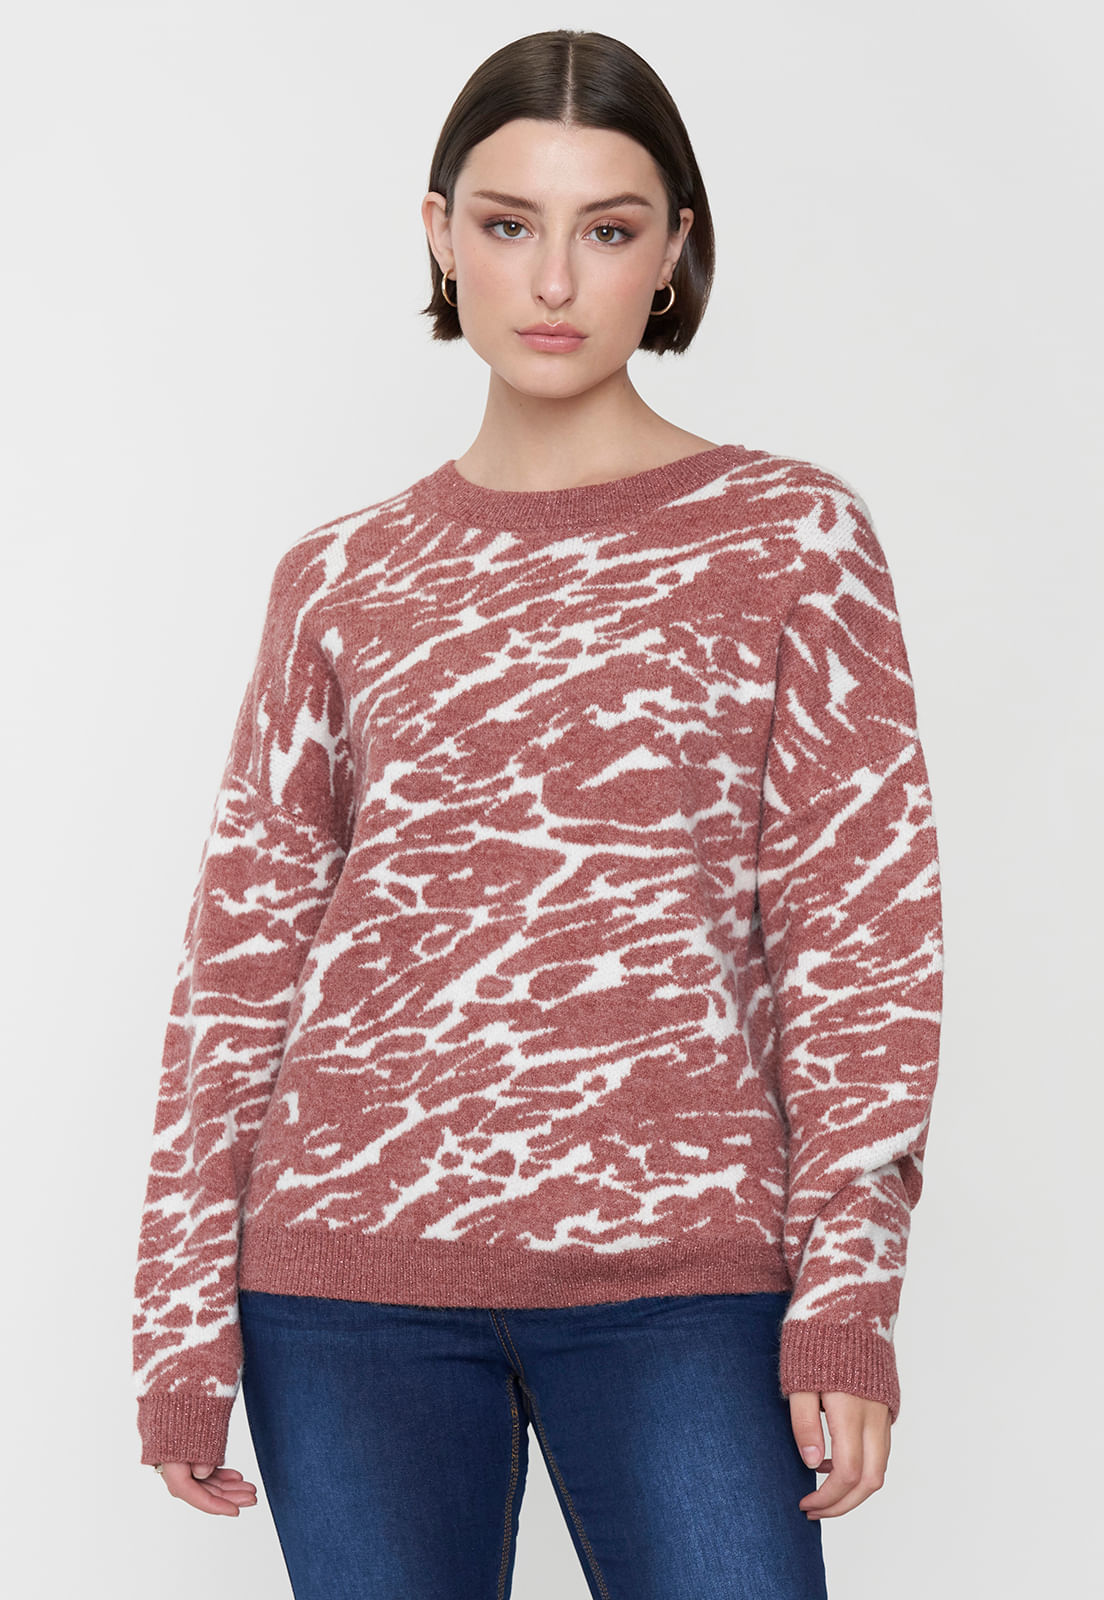 Sweater Mujer Print Cebra Beige